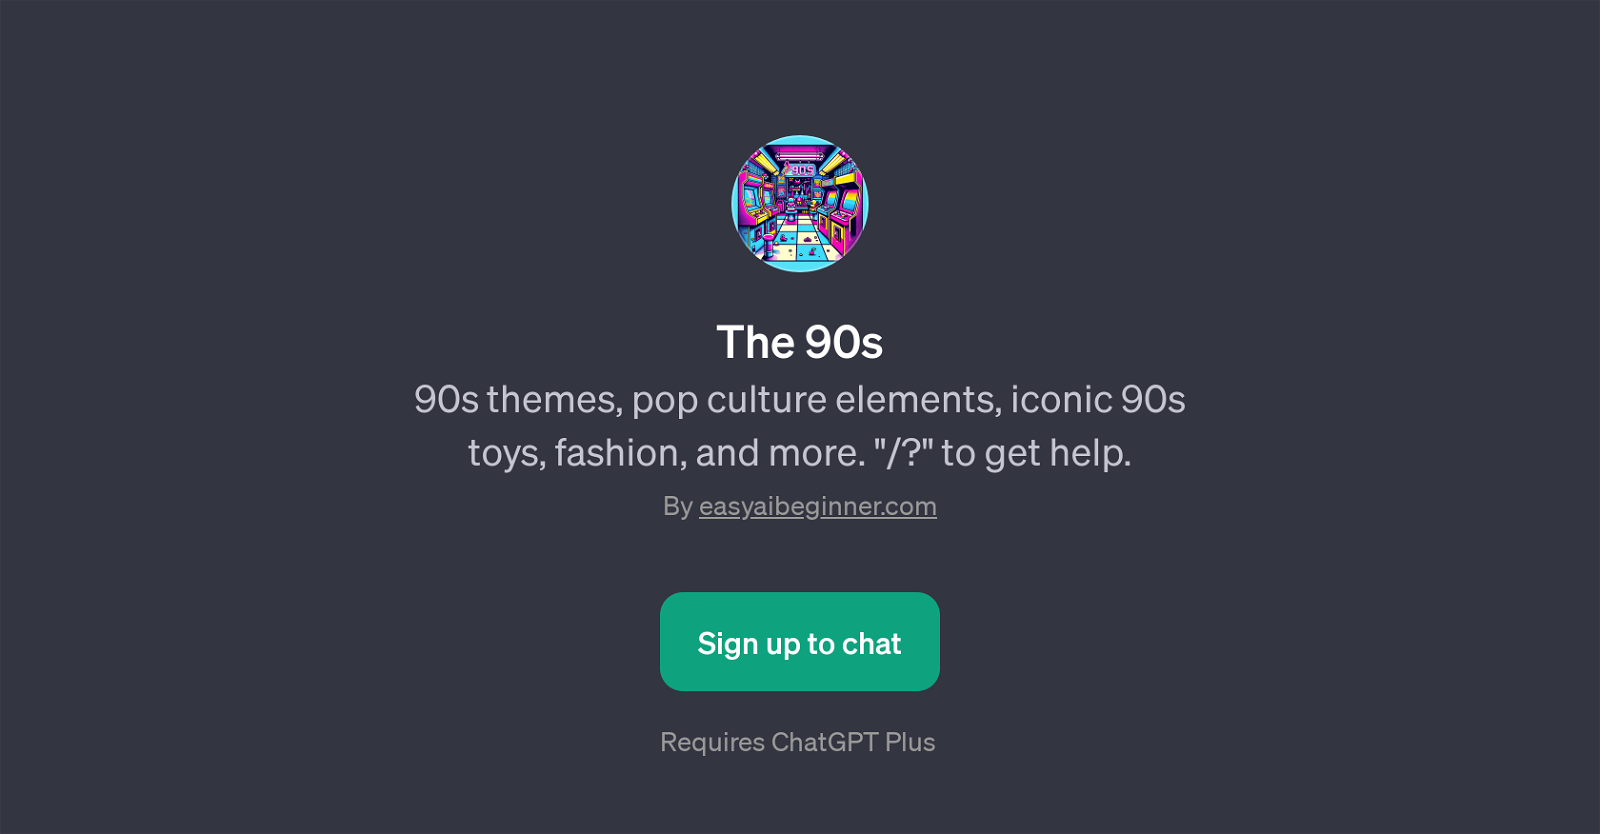 The 90s website